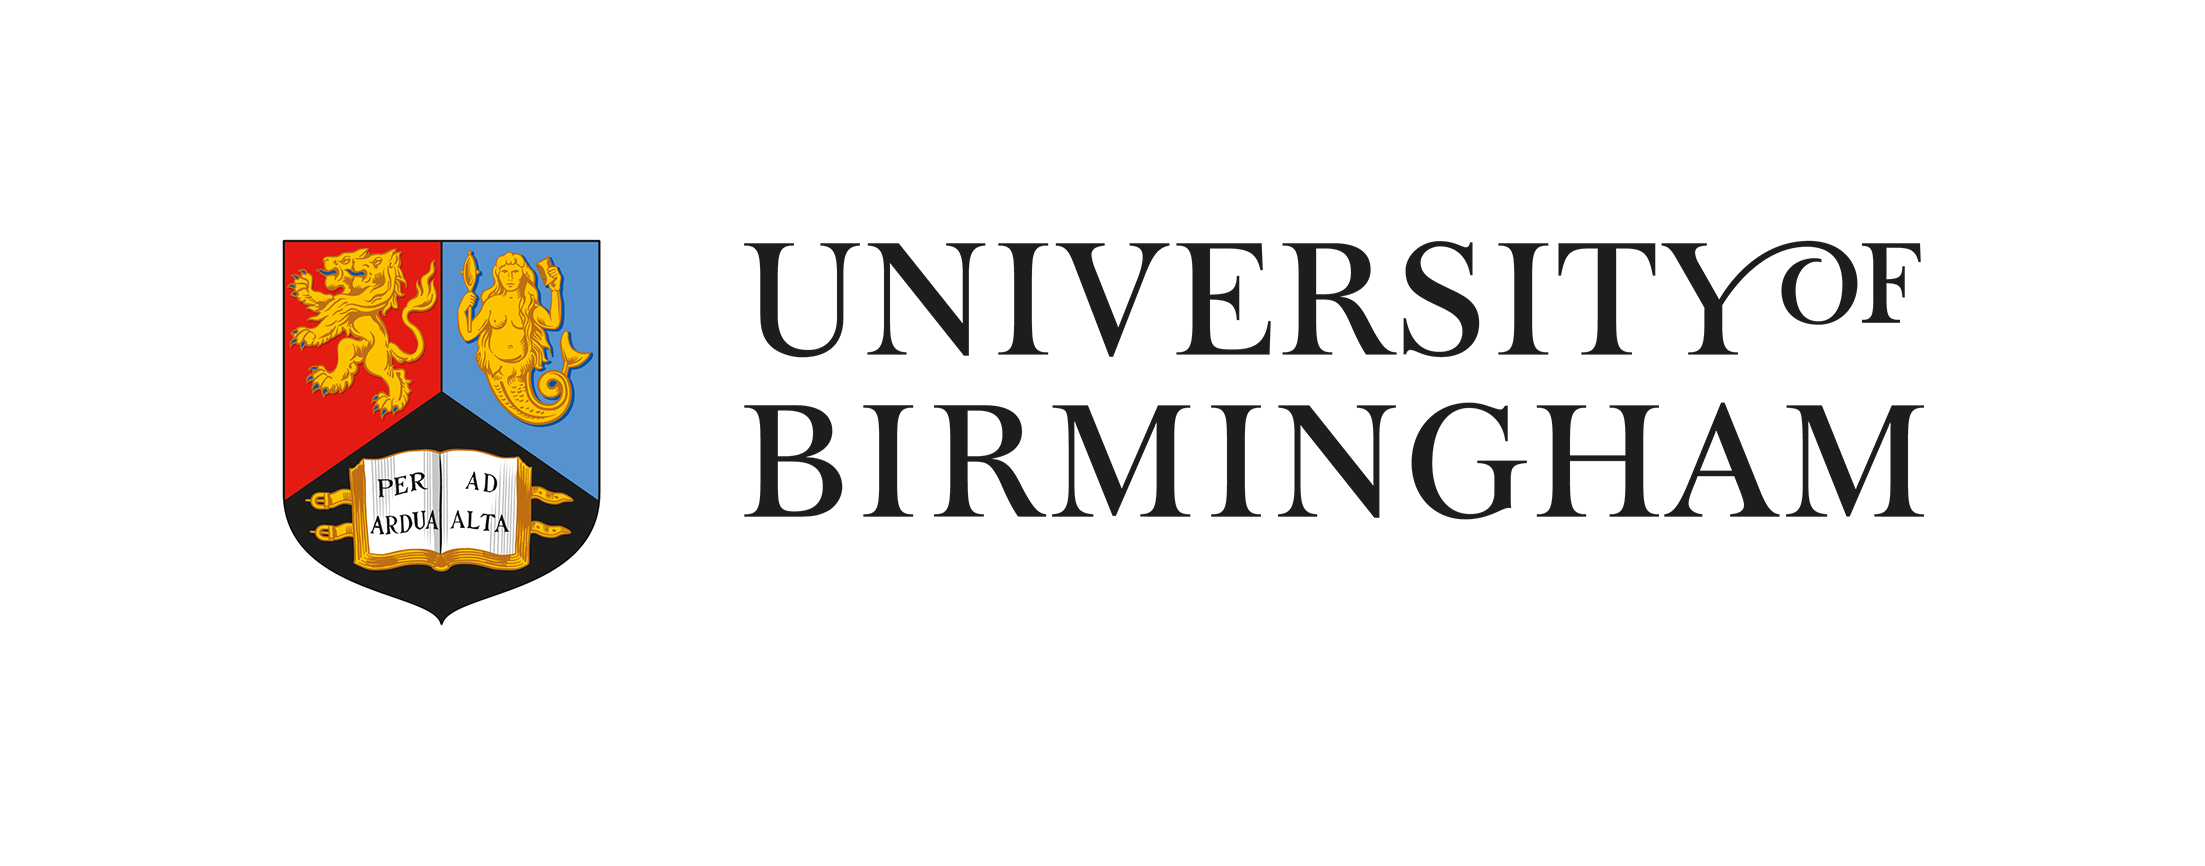 University of Birmingham-UK